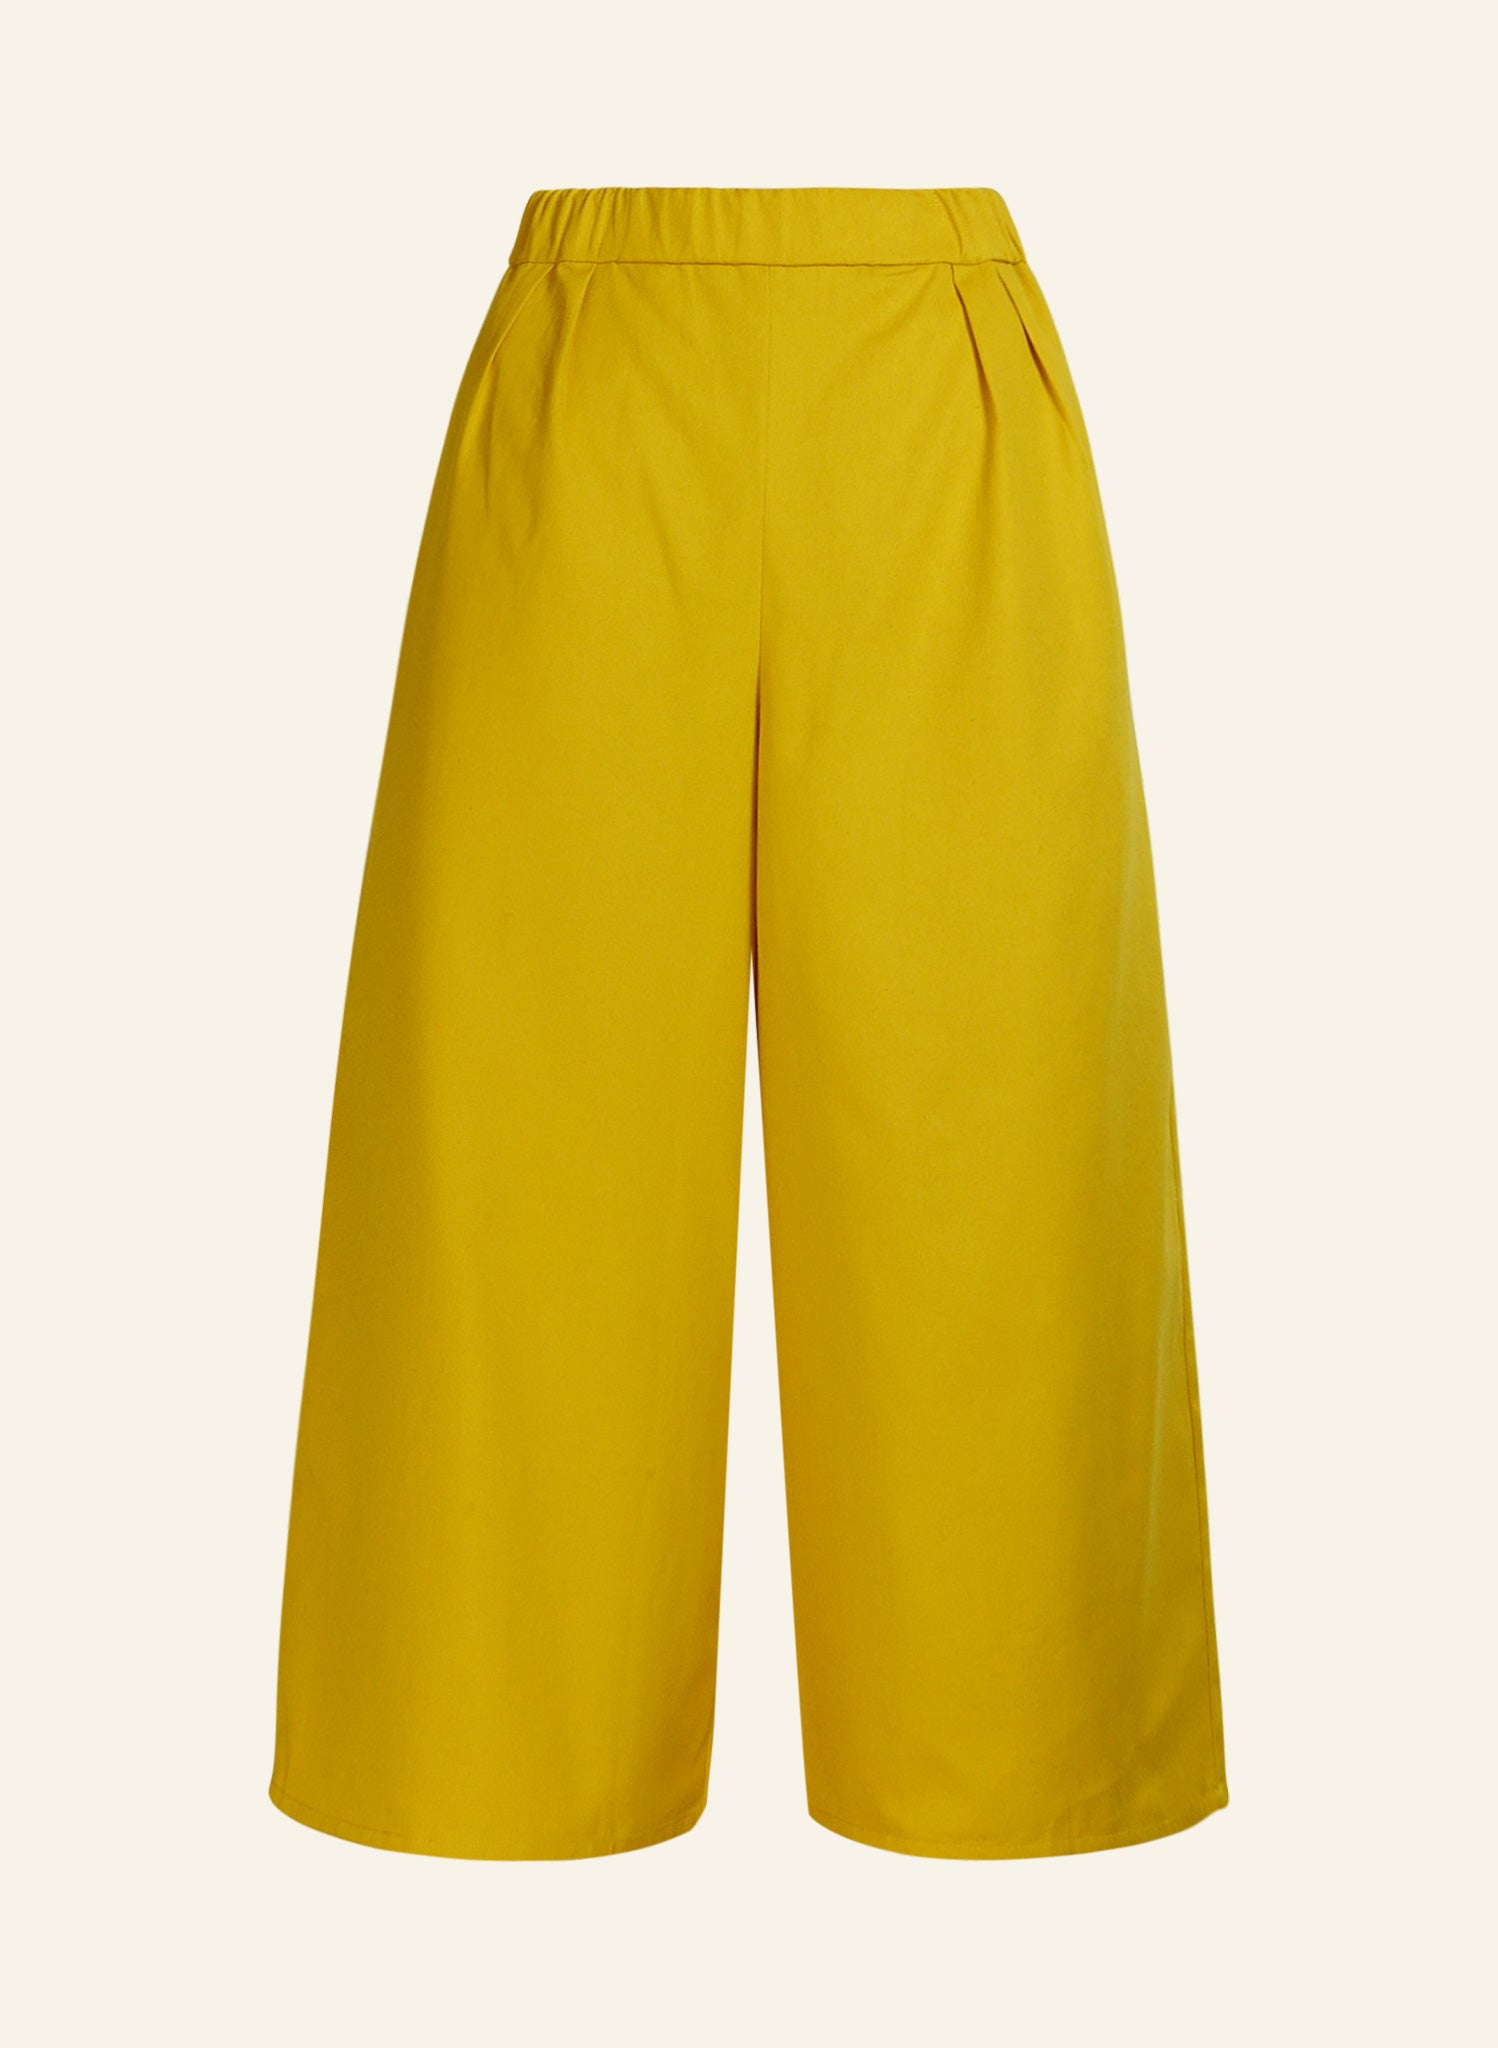 Edith - Yellow Cotton Hemp Trousers